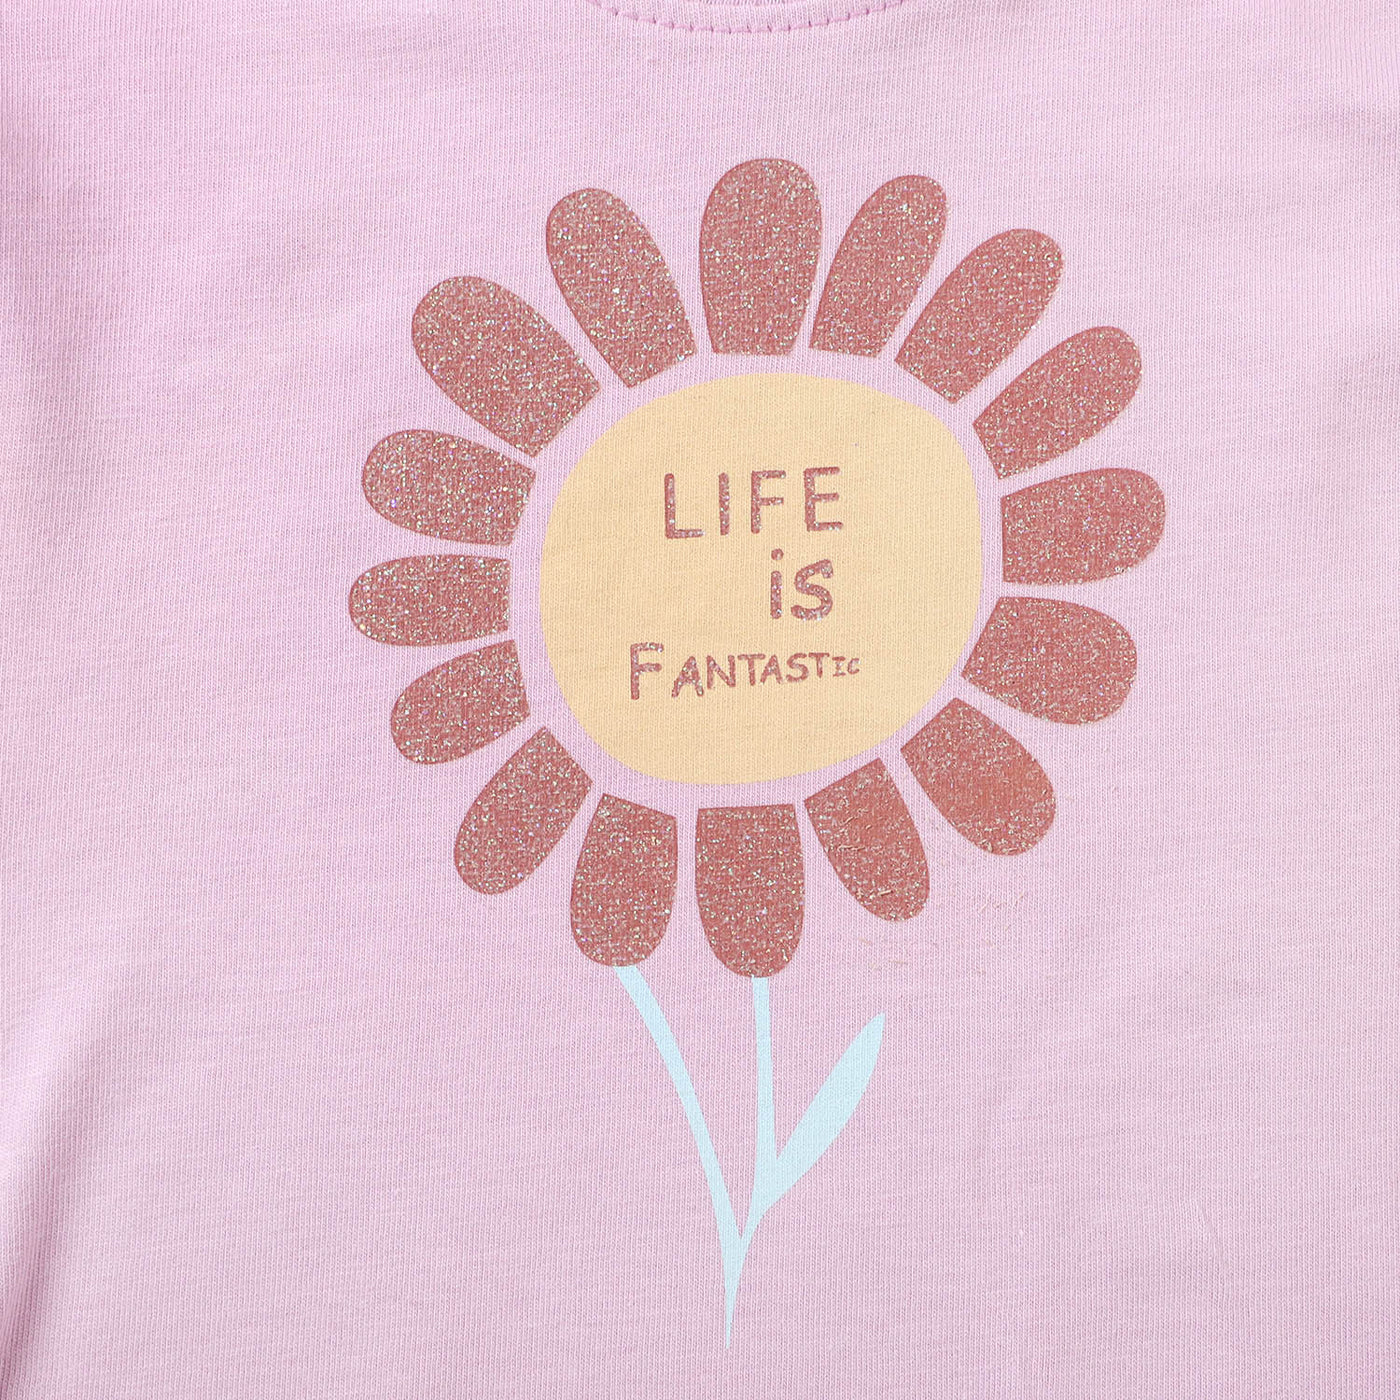 Infant Girls T-Shirt Fantastic Life  - Orchid Bou